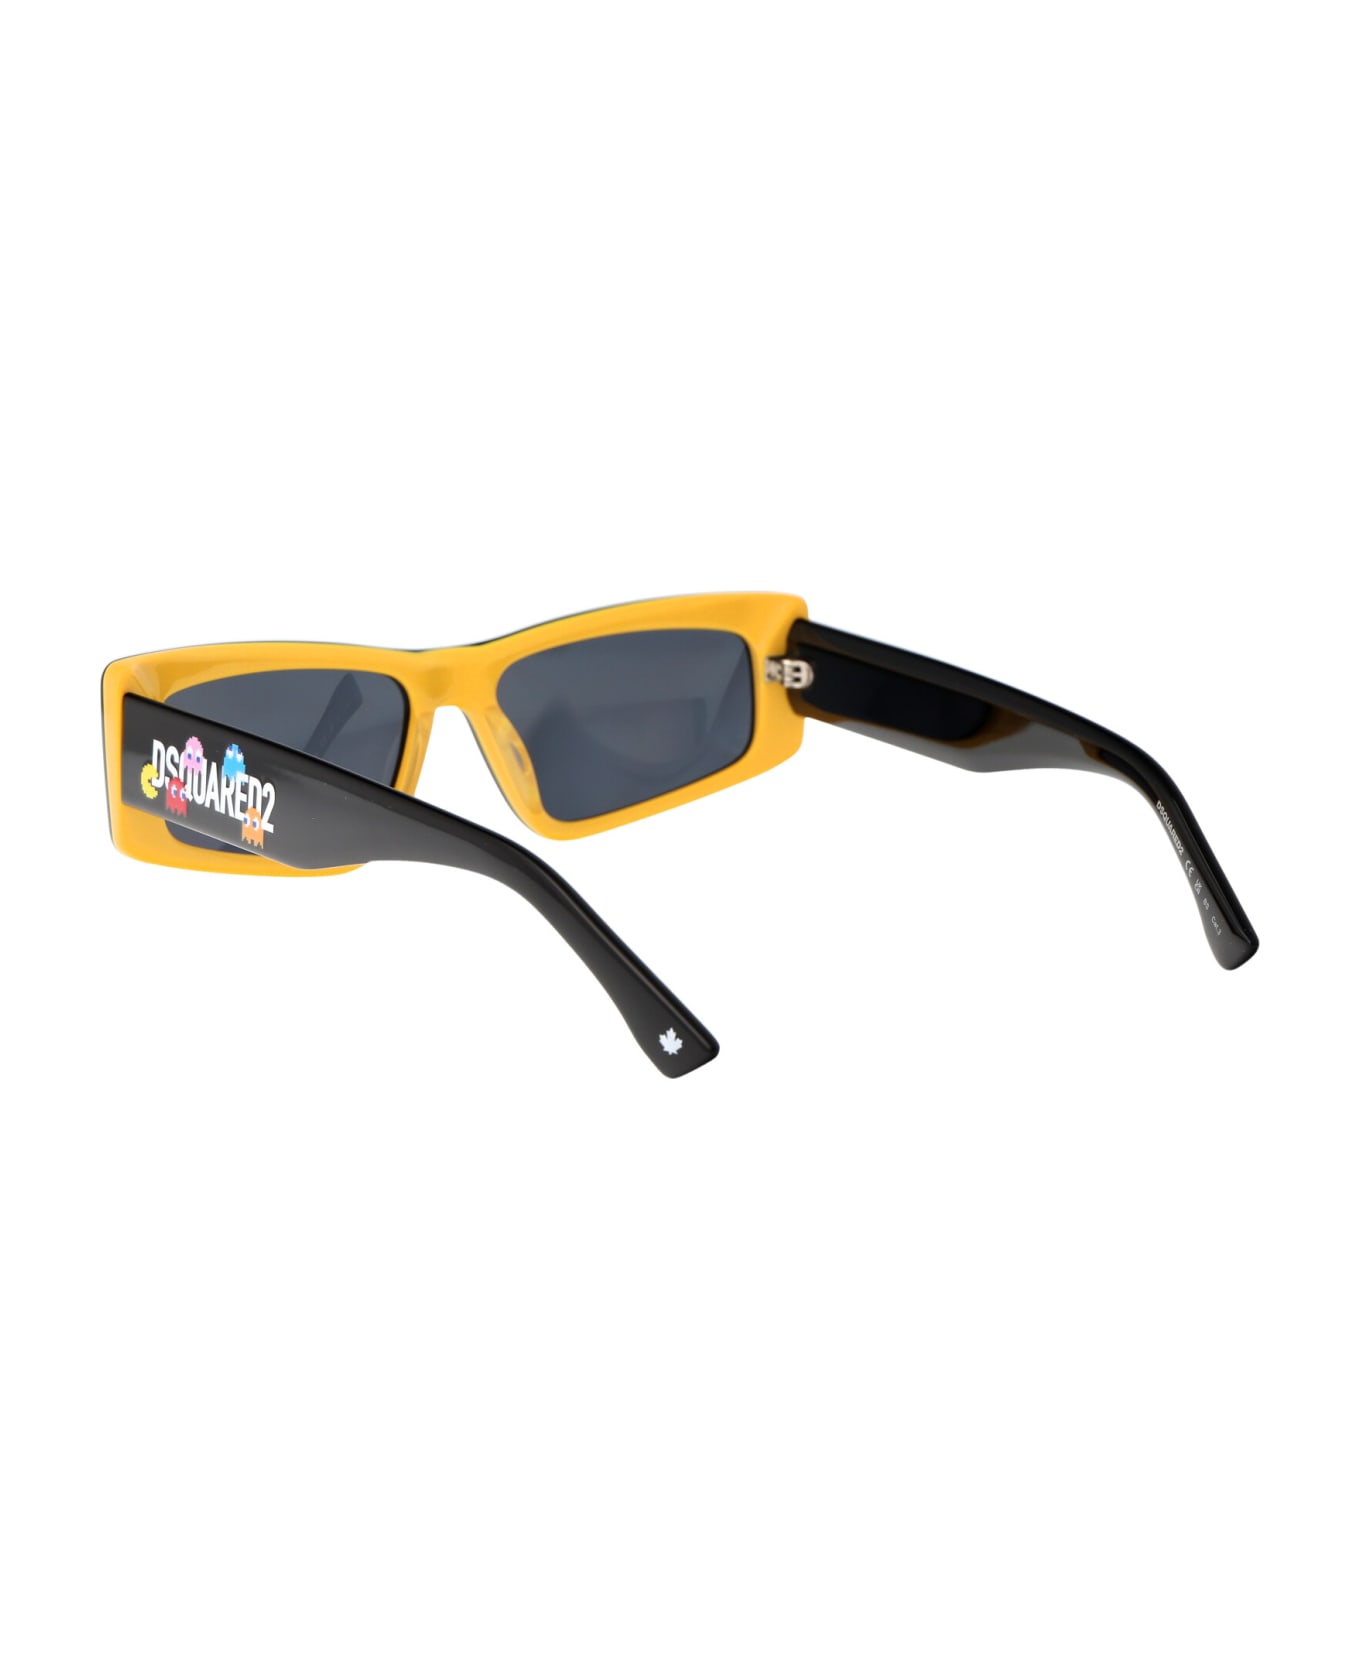 Dsquared2 Eyewear D2 Pac Sunglasses - 71CIR BLACK YELLOW サングラス